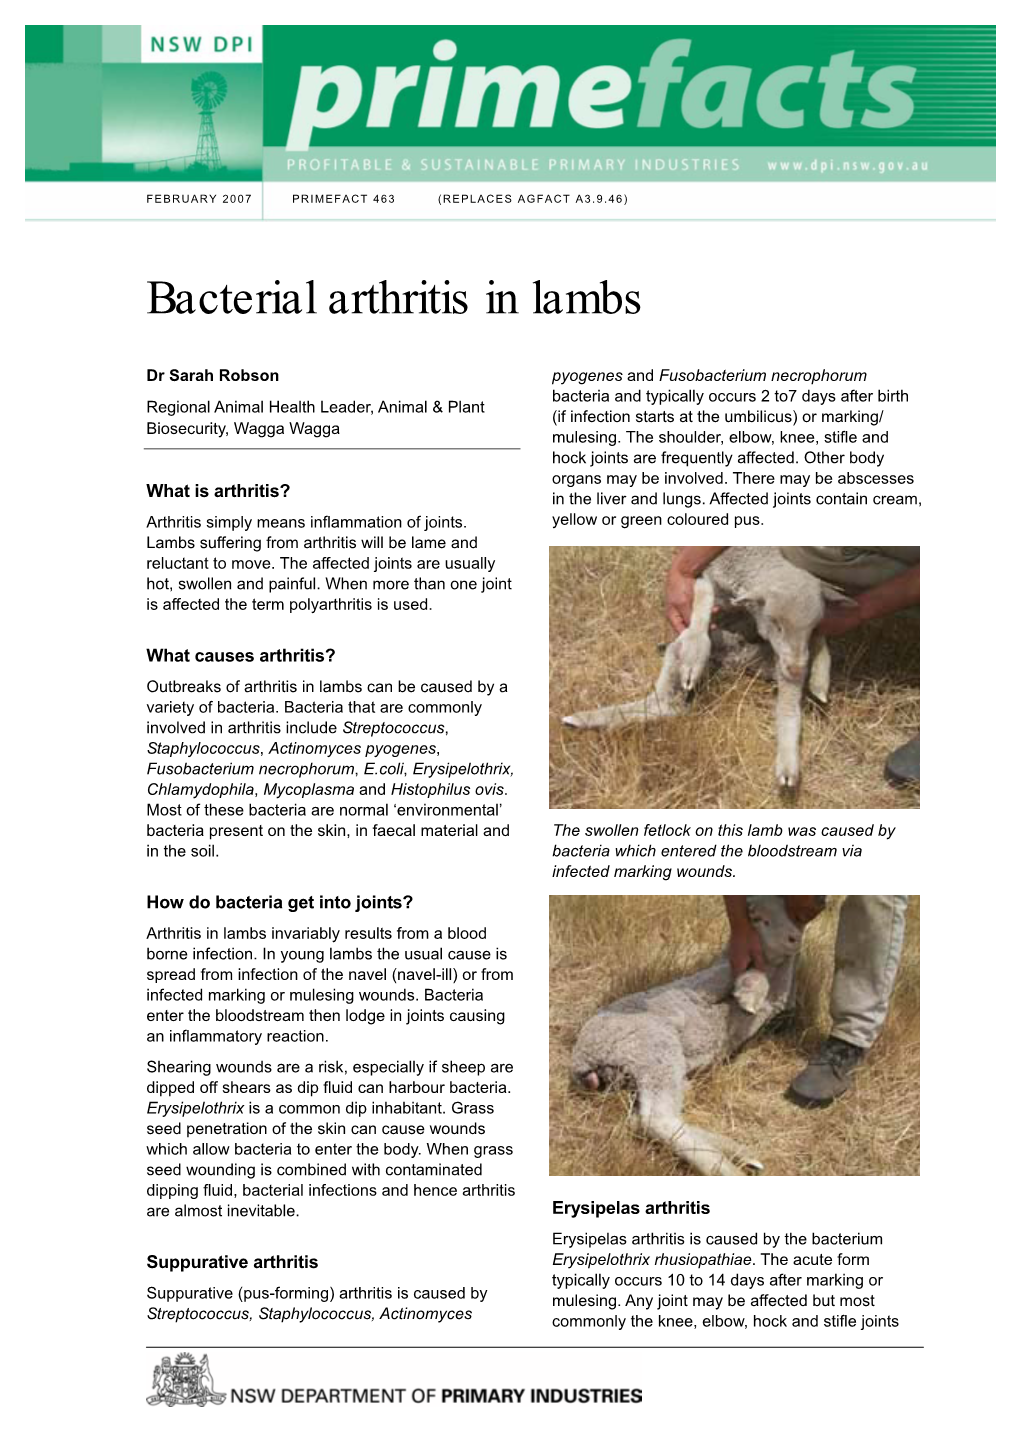 Bacterial Arthritis in Lambs